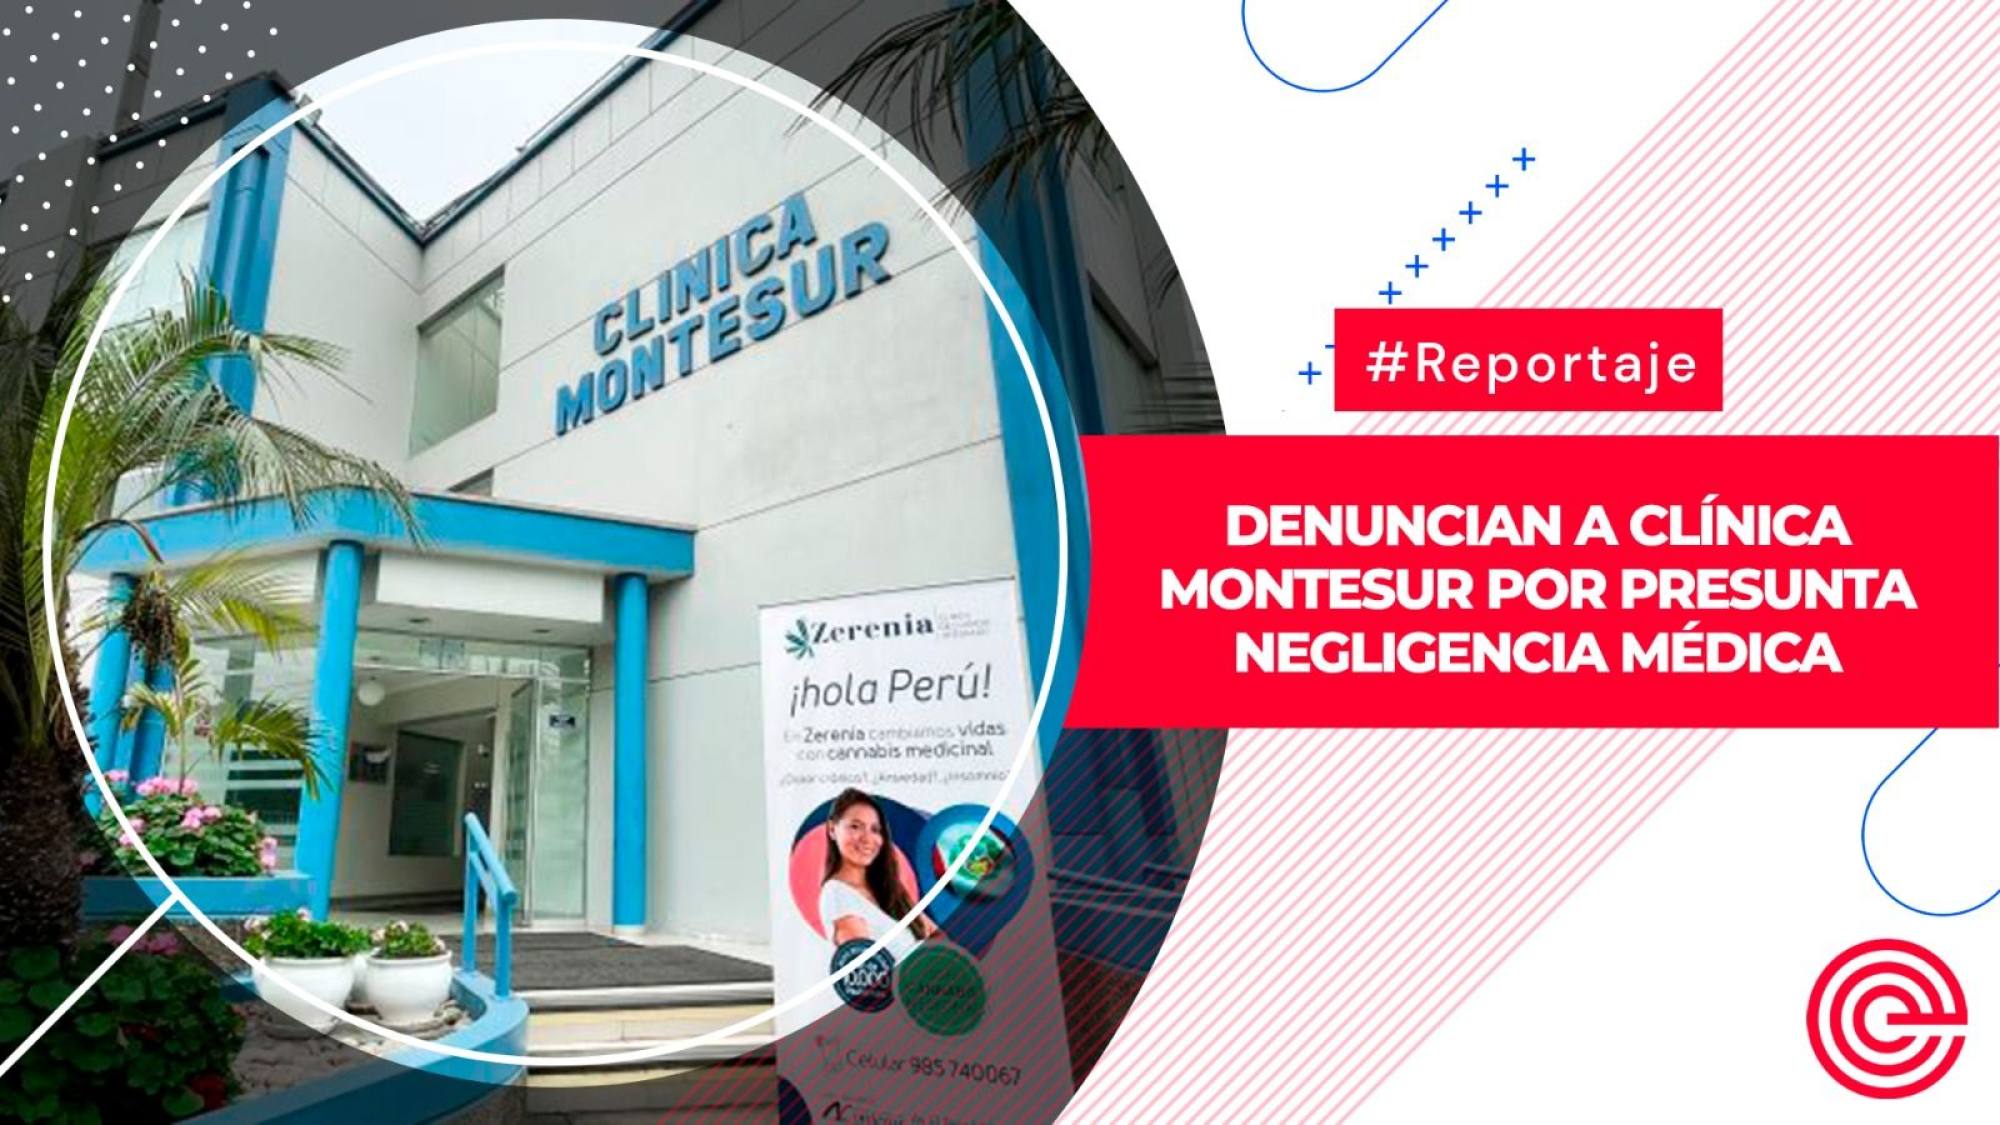 Denuncian a clínica Montesur por presunta negligencia médica, Epicentro TV